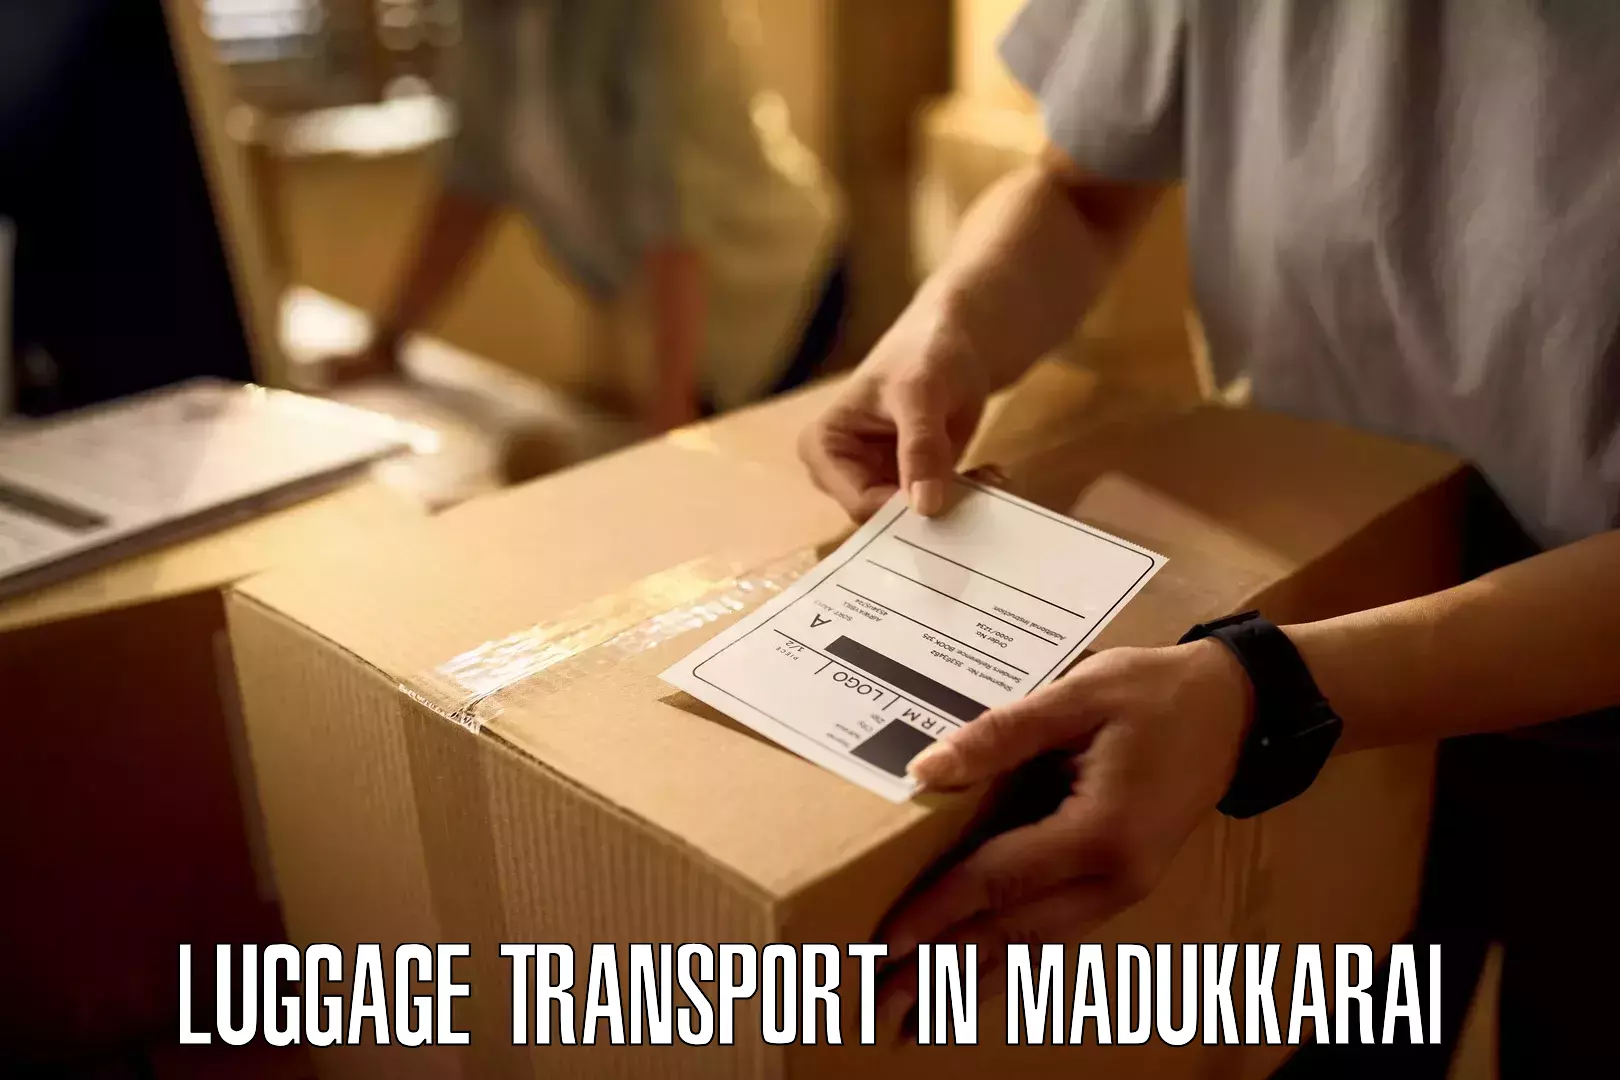 Luggage transport consulting in Madukkarai